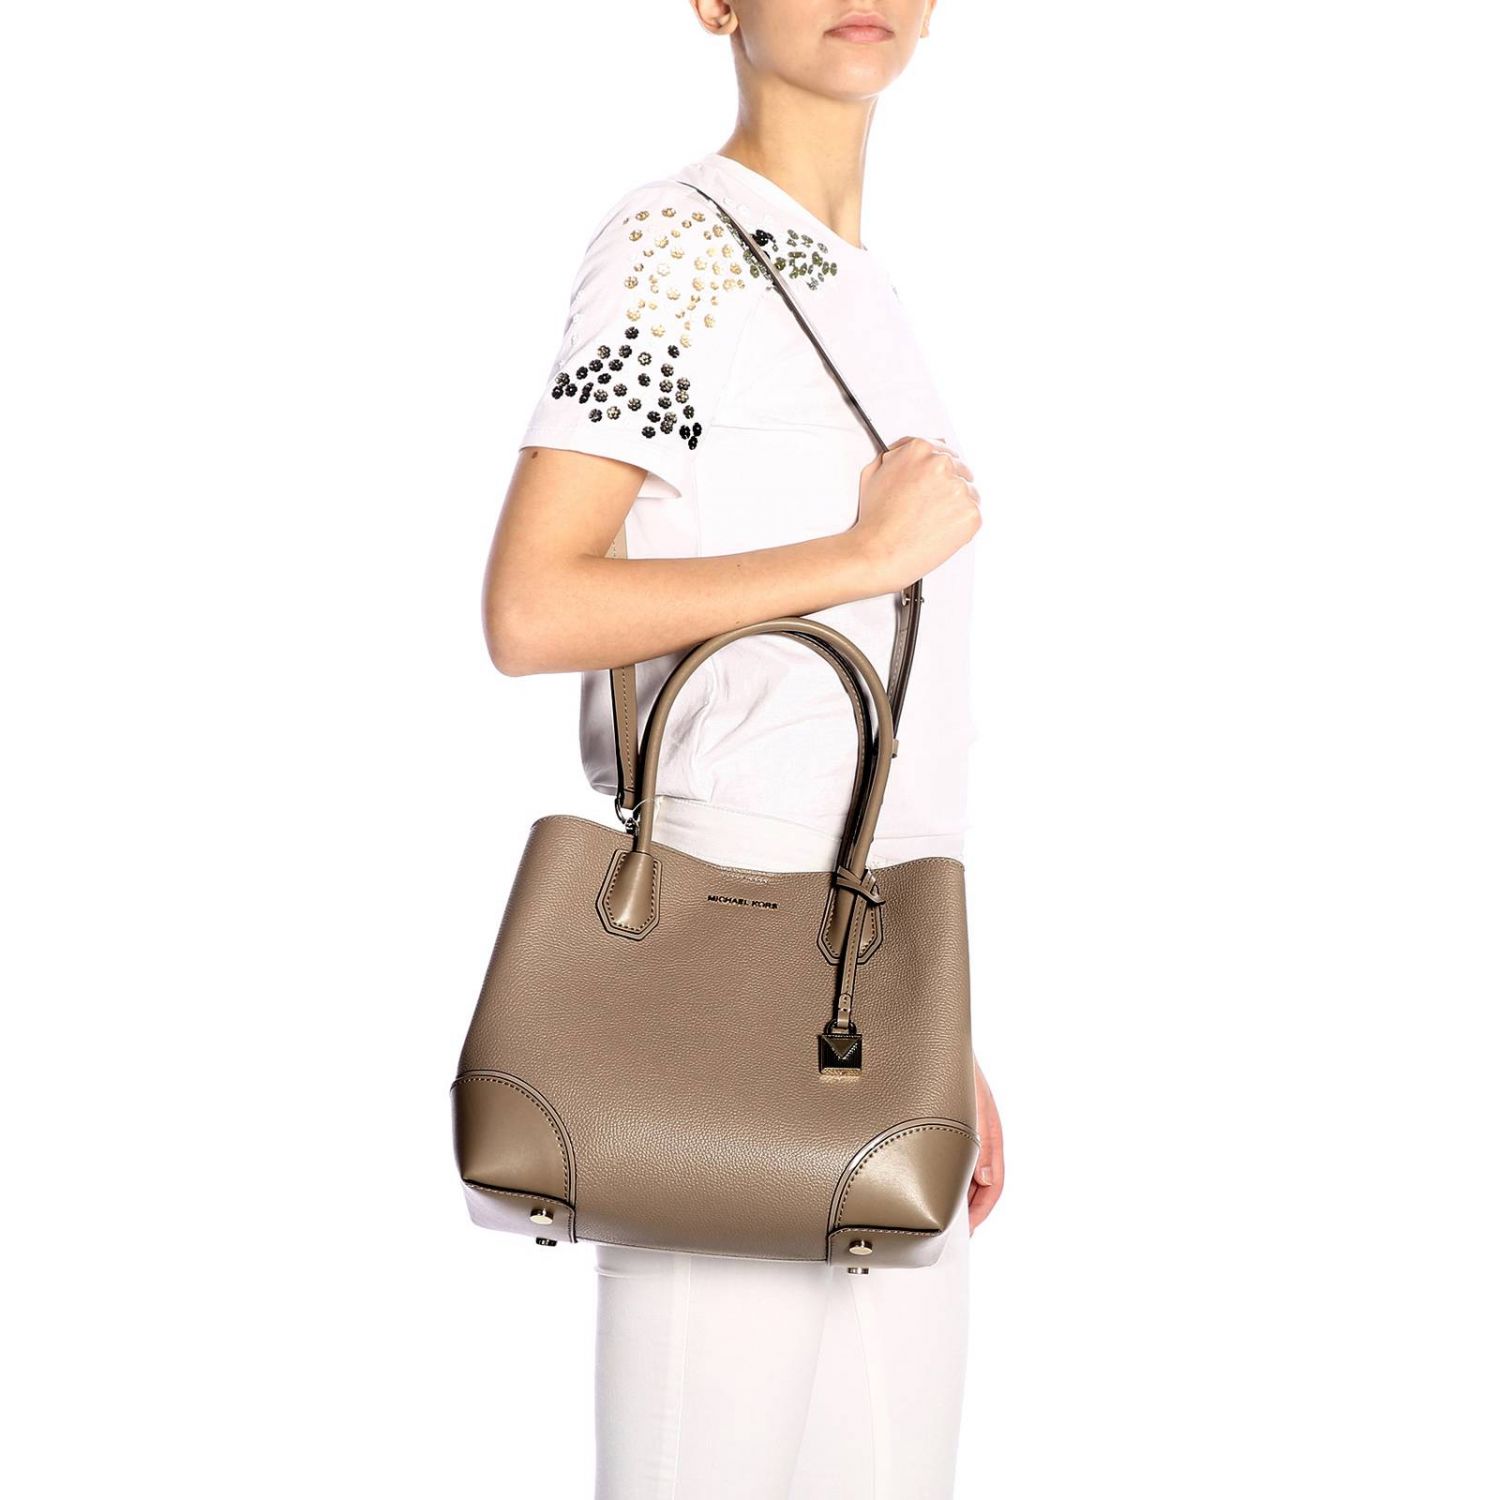 Michael Michael Kors Outlet: Shoulder bag women - Dove Grey | Handbag ...